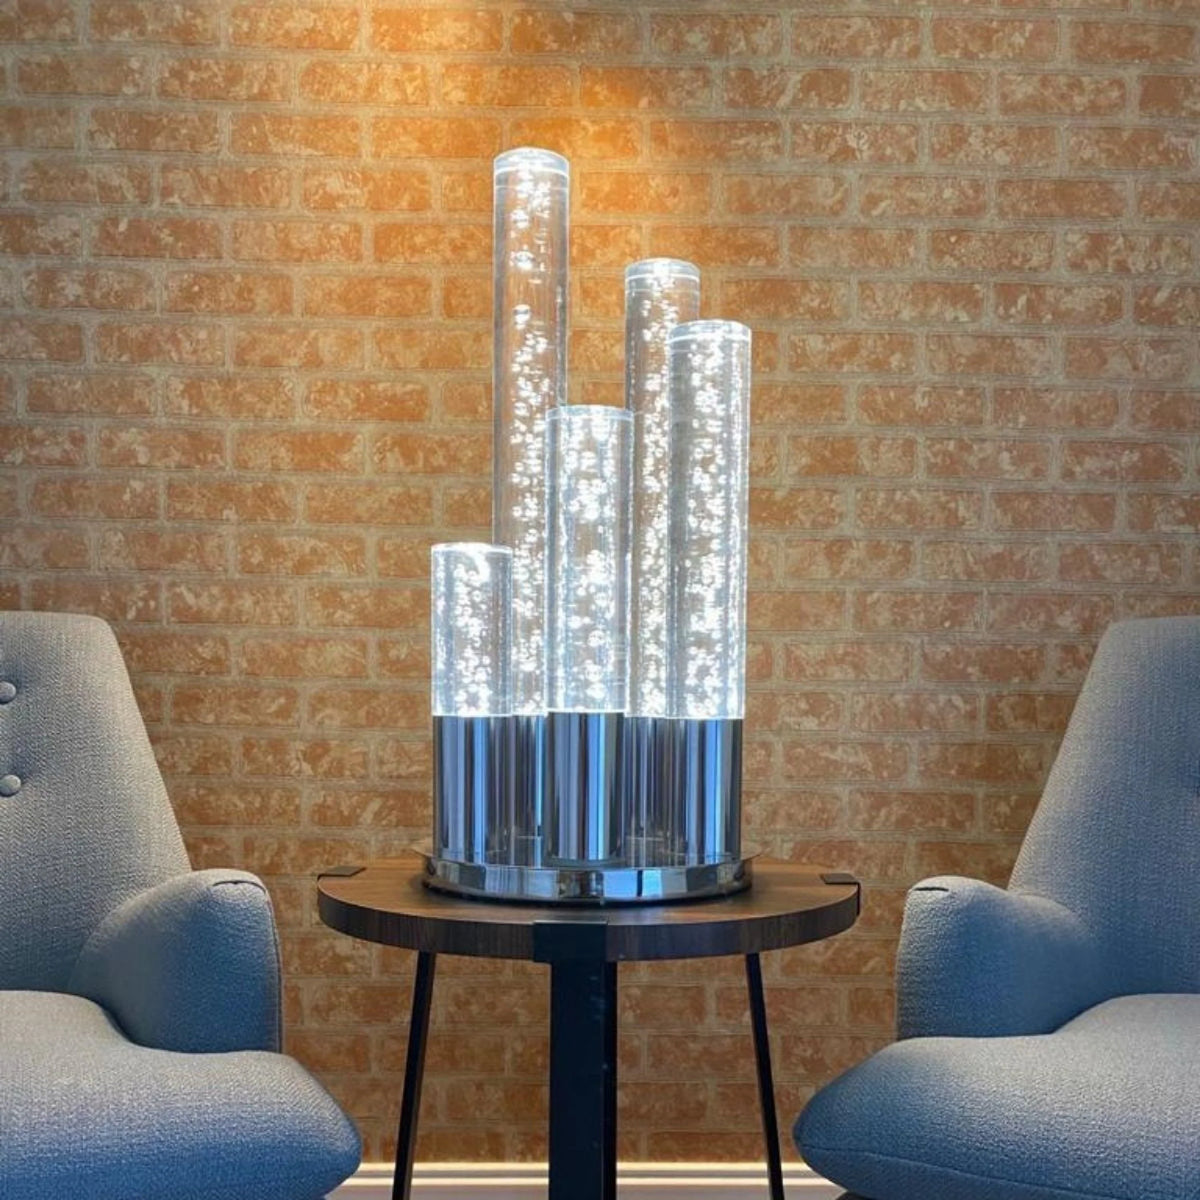 Chrome Modern Table Lamp with 5 Acrylic Cylinder lights